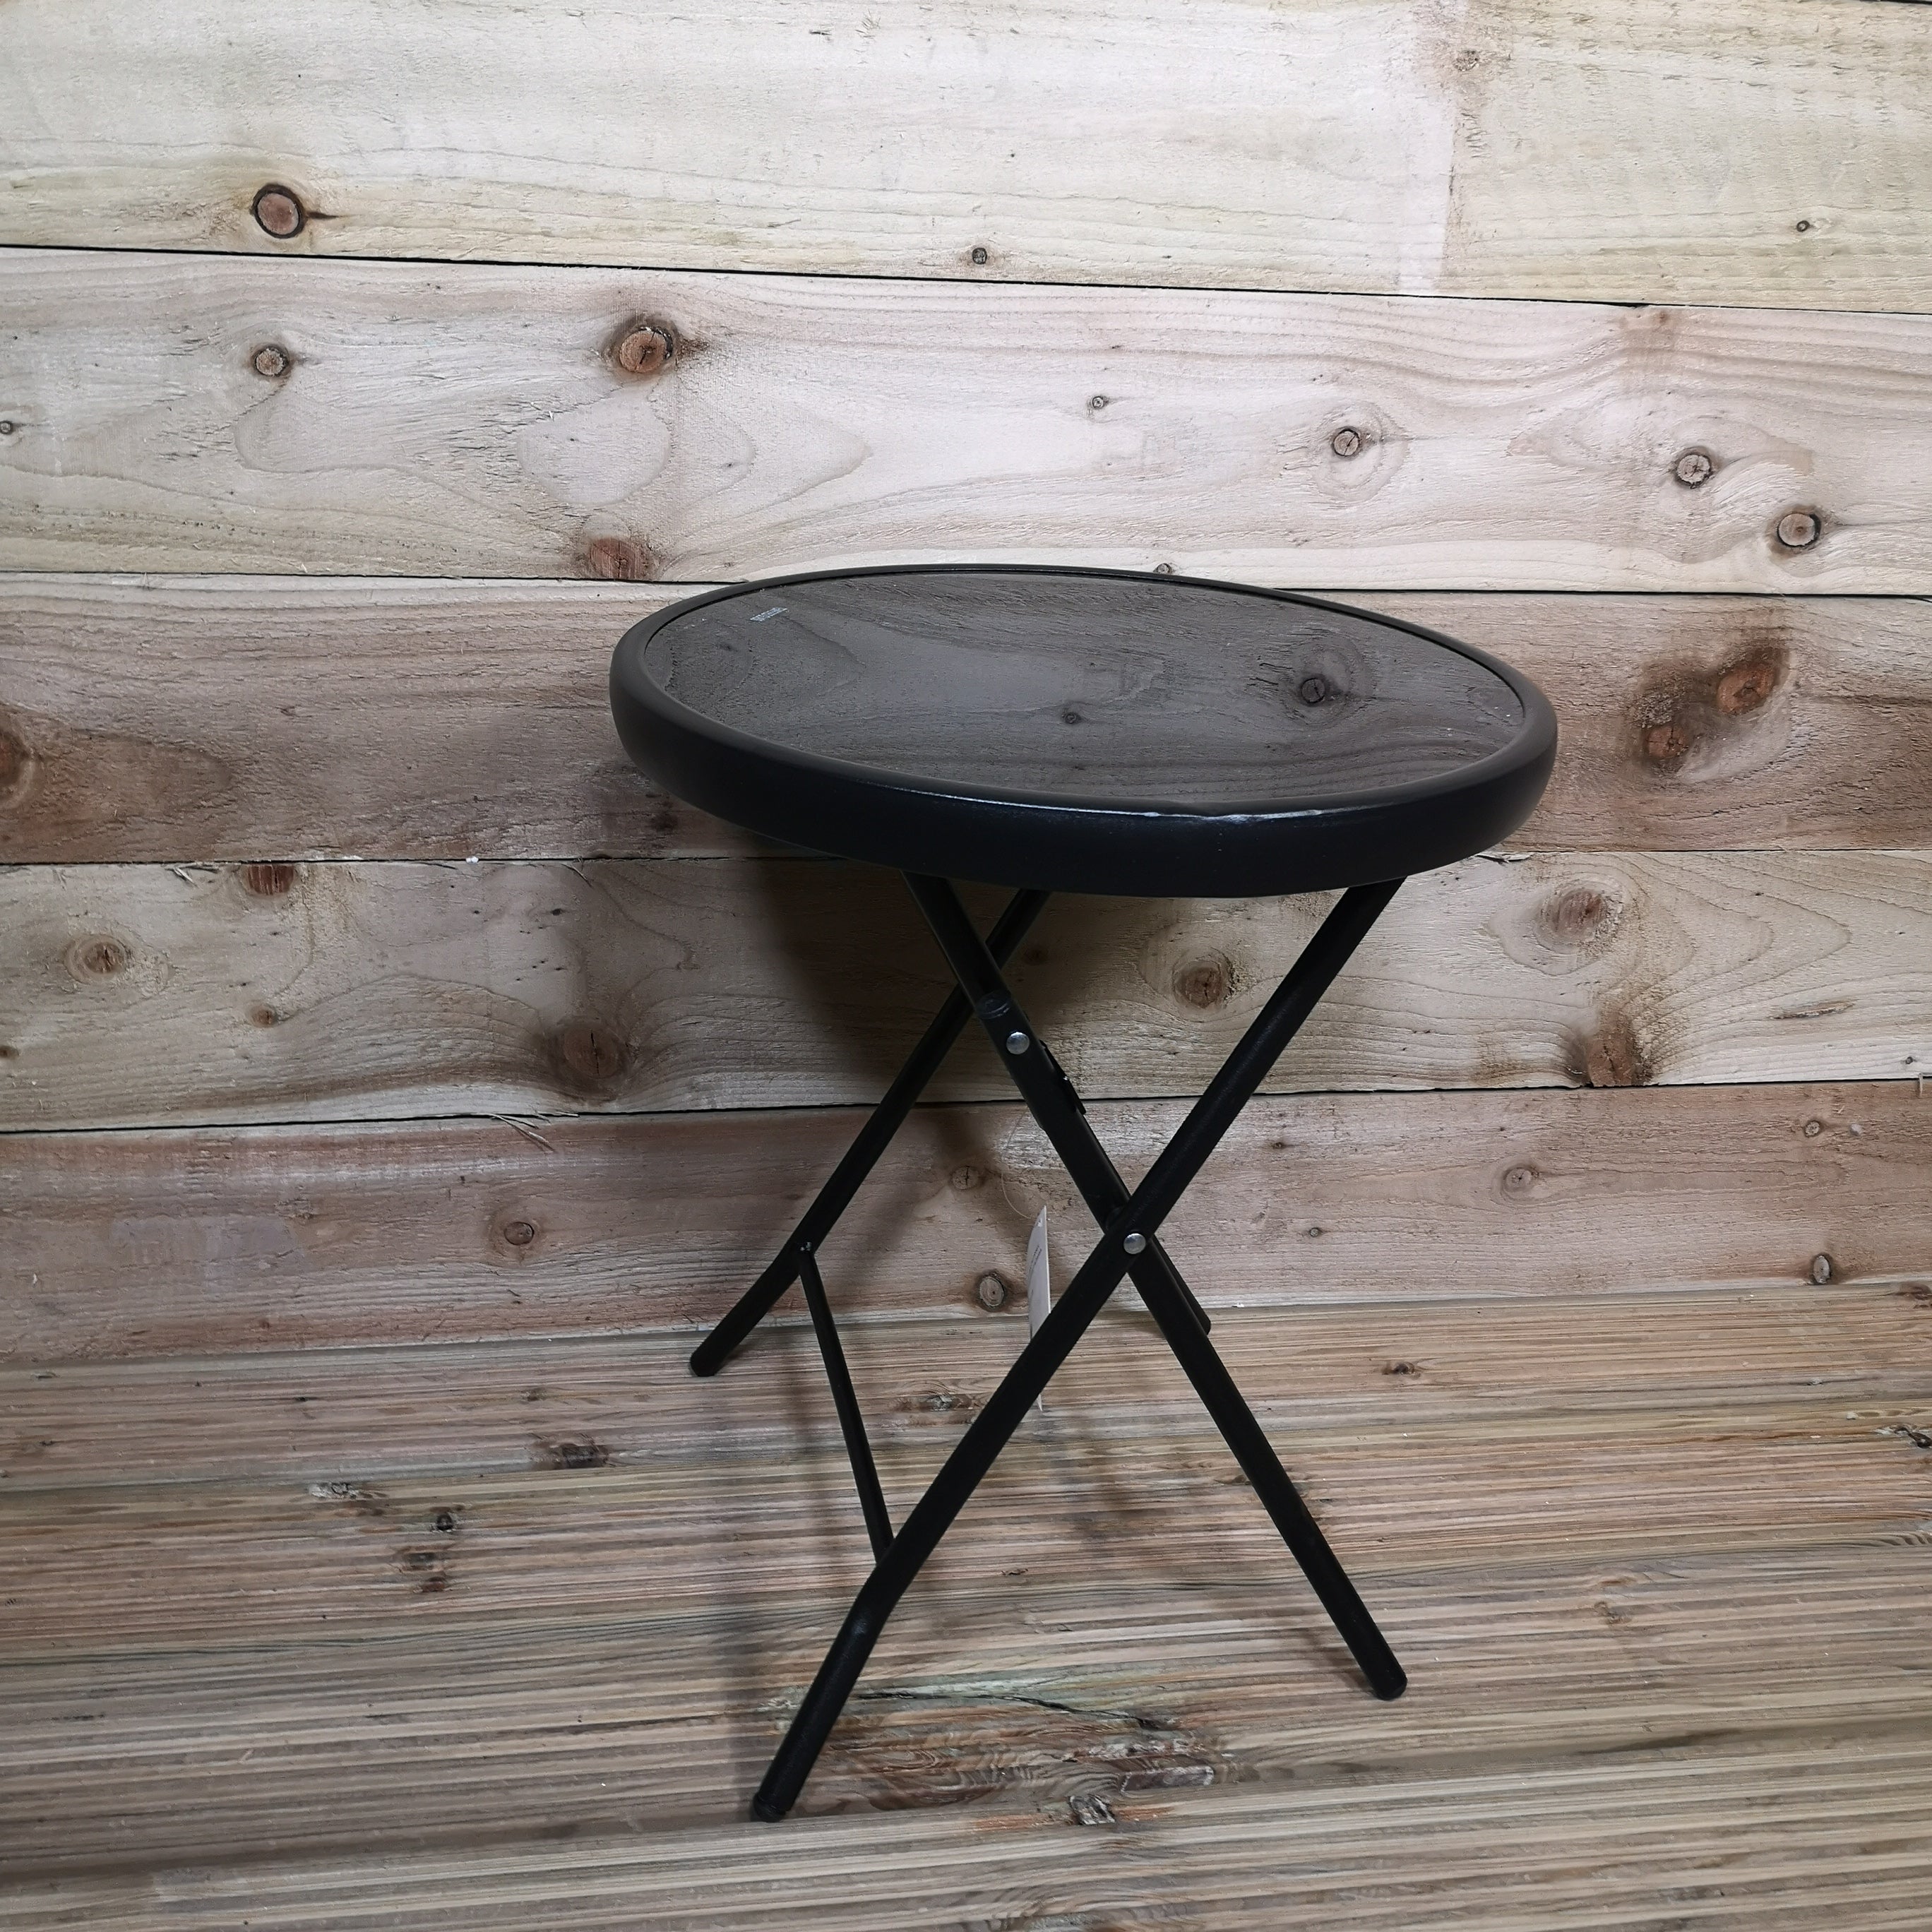 40 x 46cm Round Black Glass Folding Garden Furniture Side Table